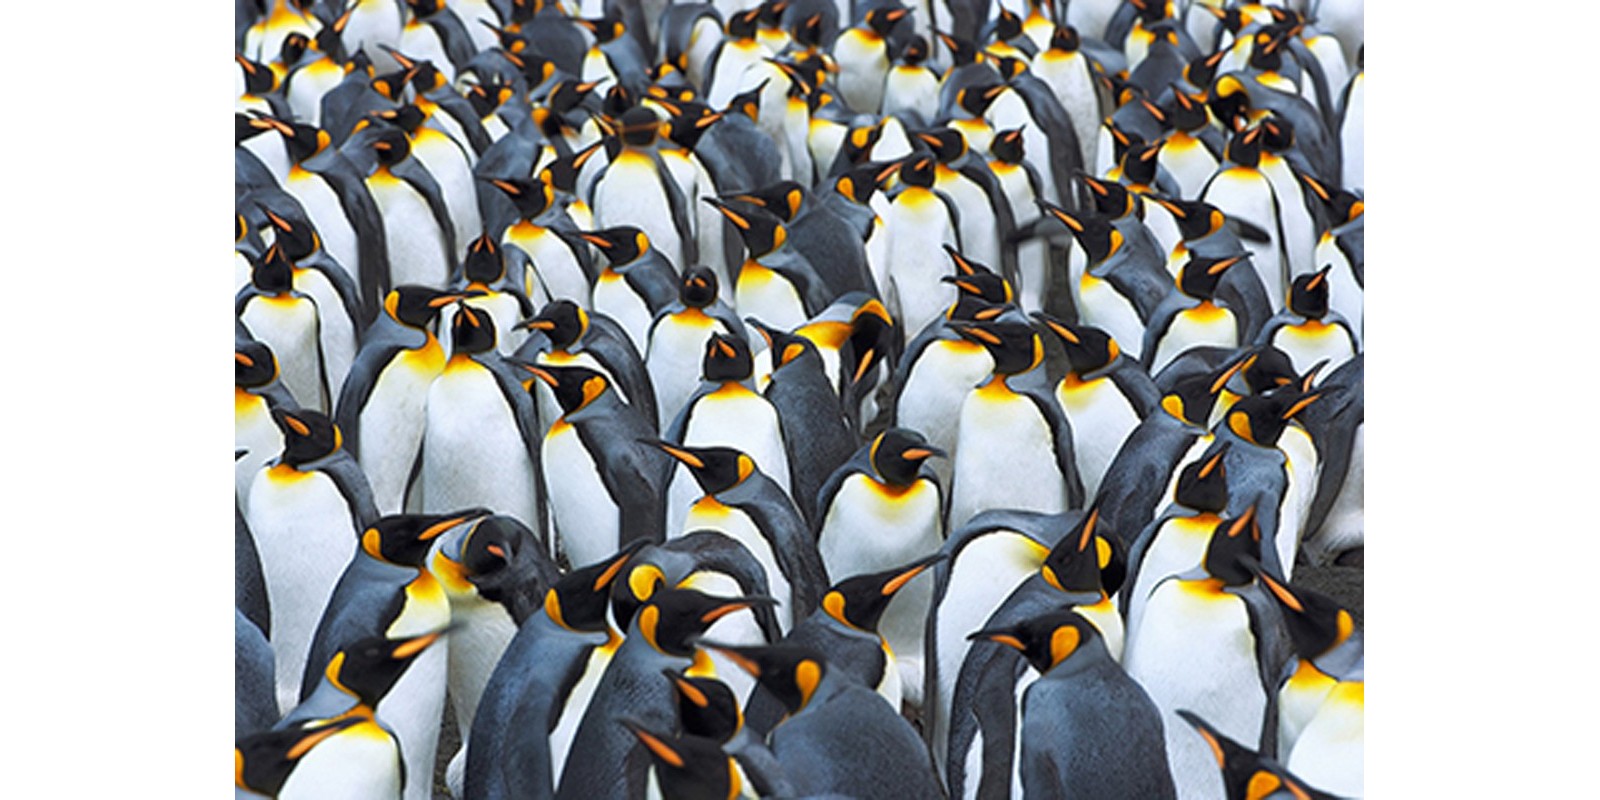 Frank Krahmer - King penguin colony, Antarctica